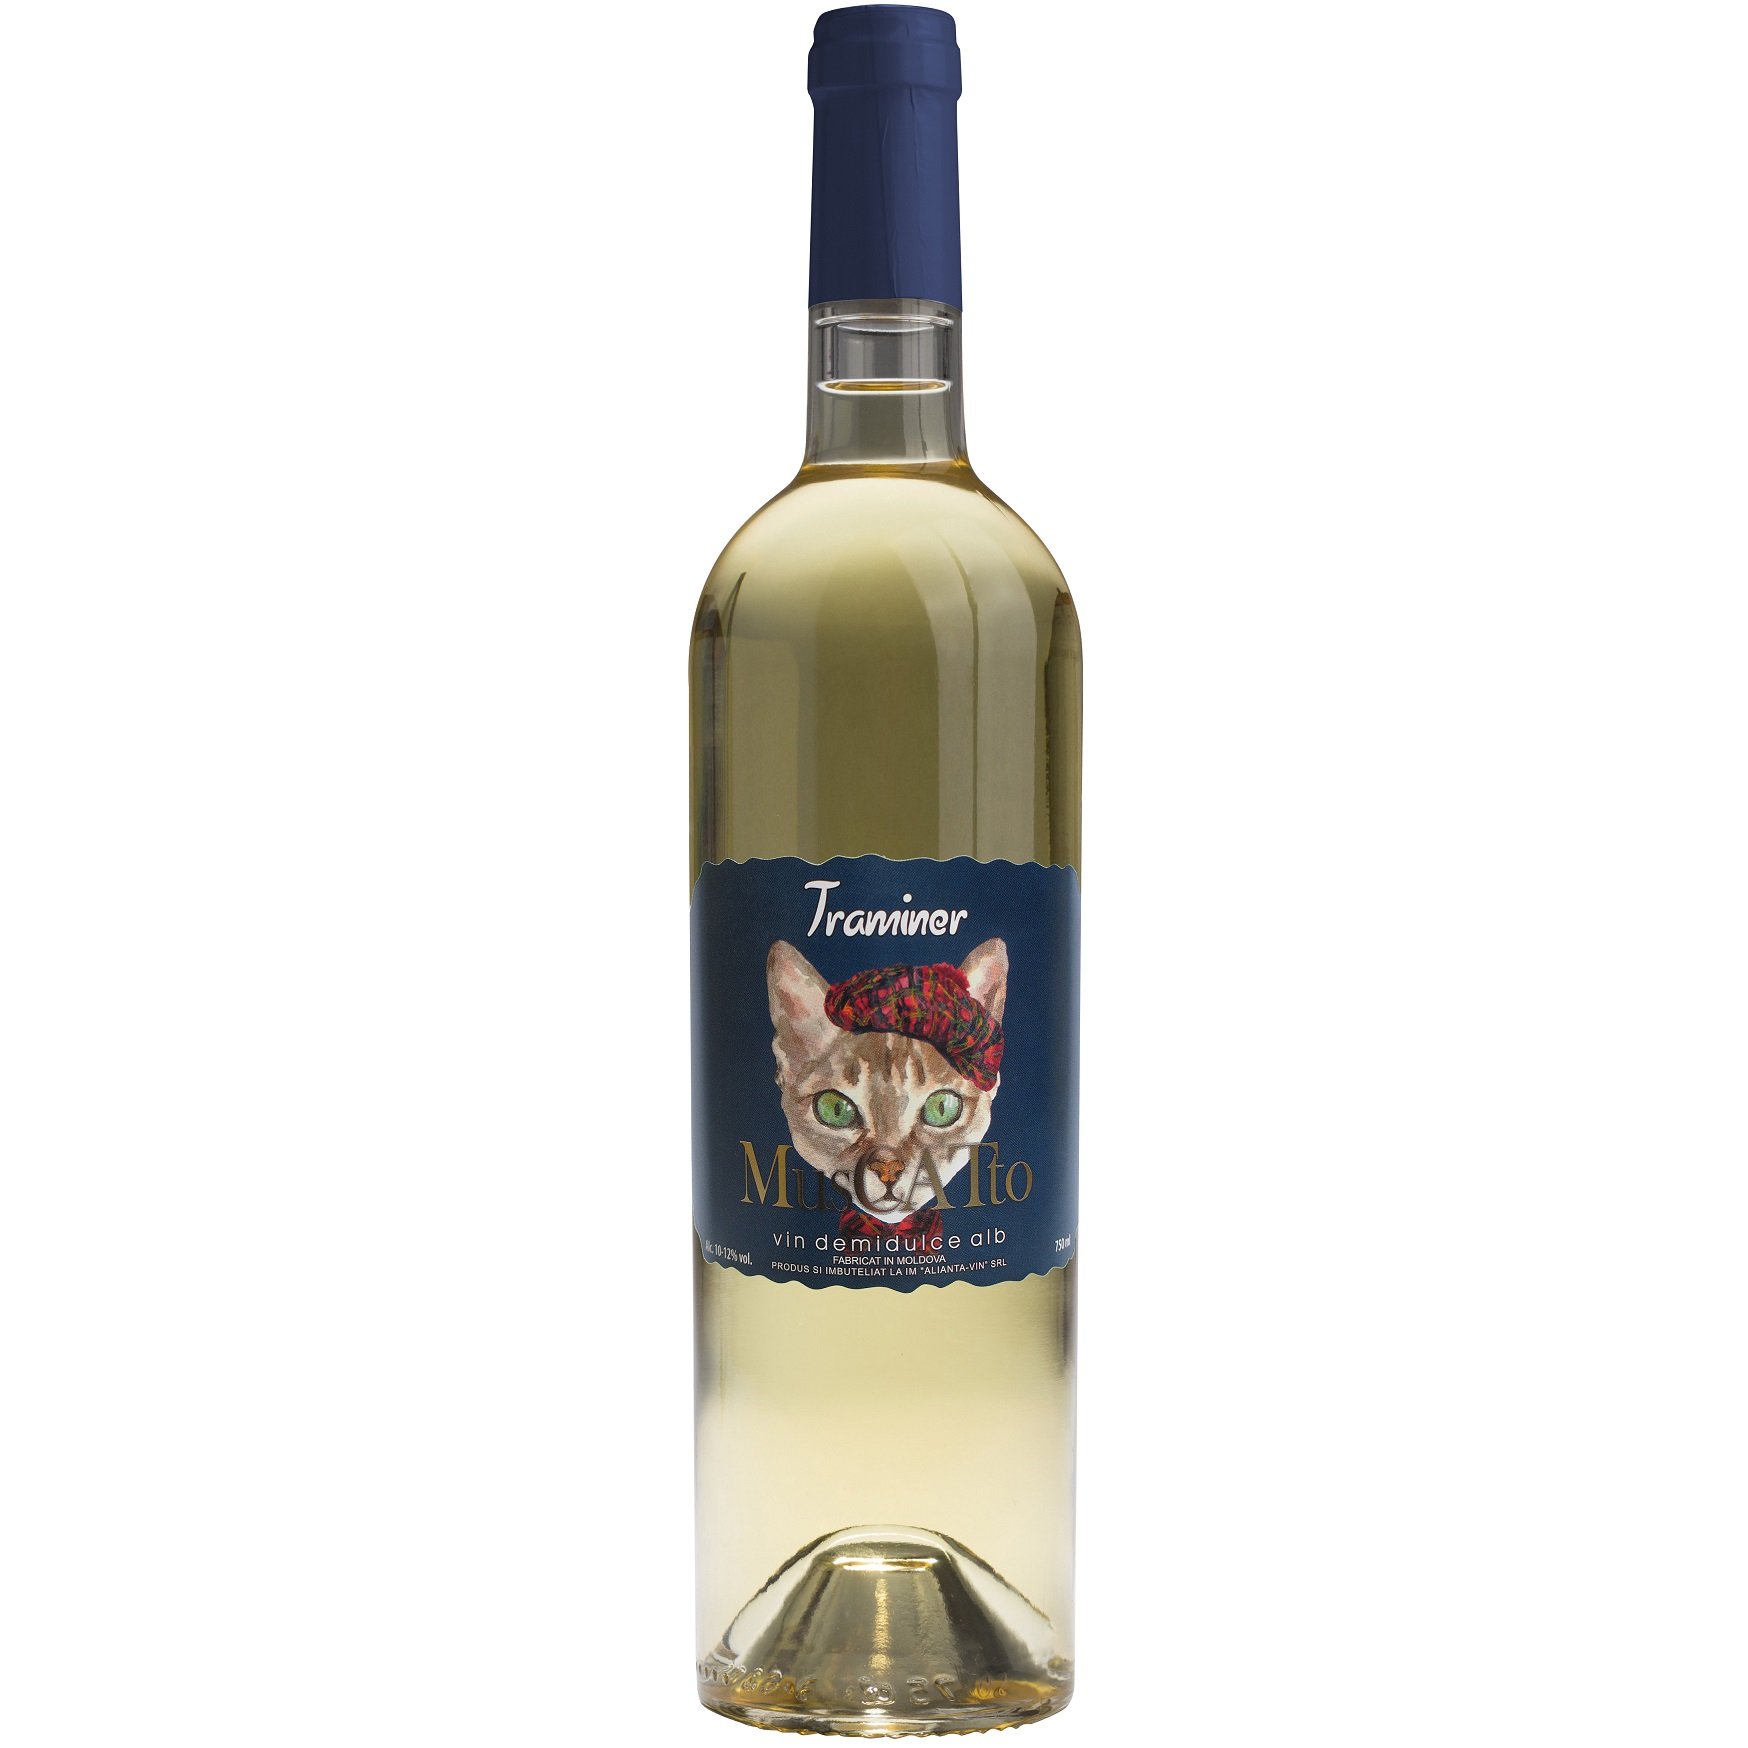 Вино Alianta vin Muscatto Traminer, белое, полусладкое, 10-12%, 0,75 л - фото 1